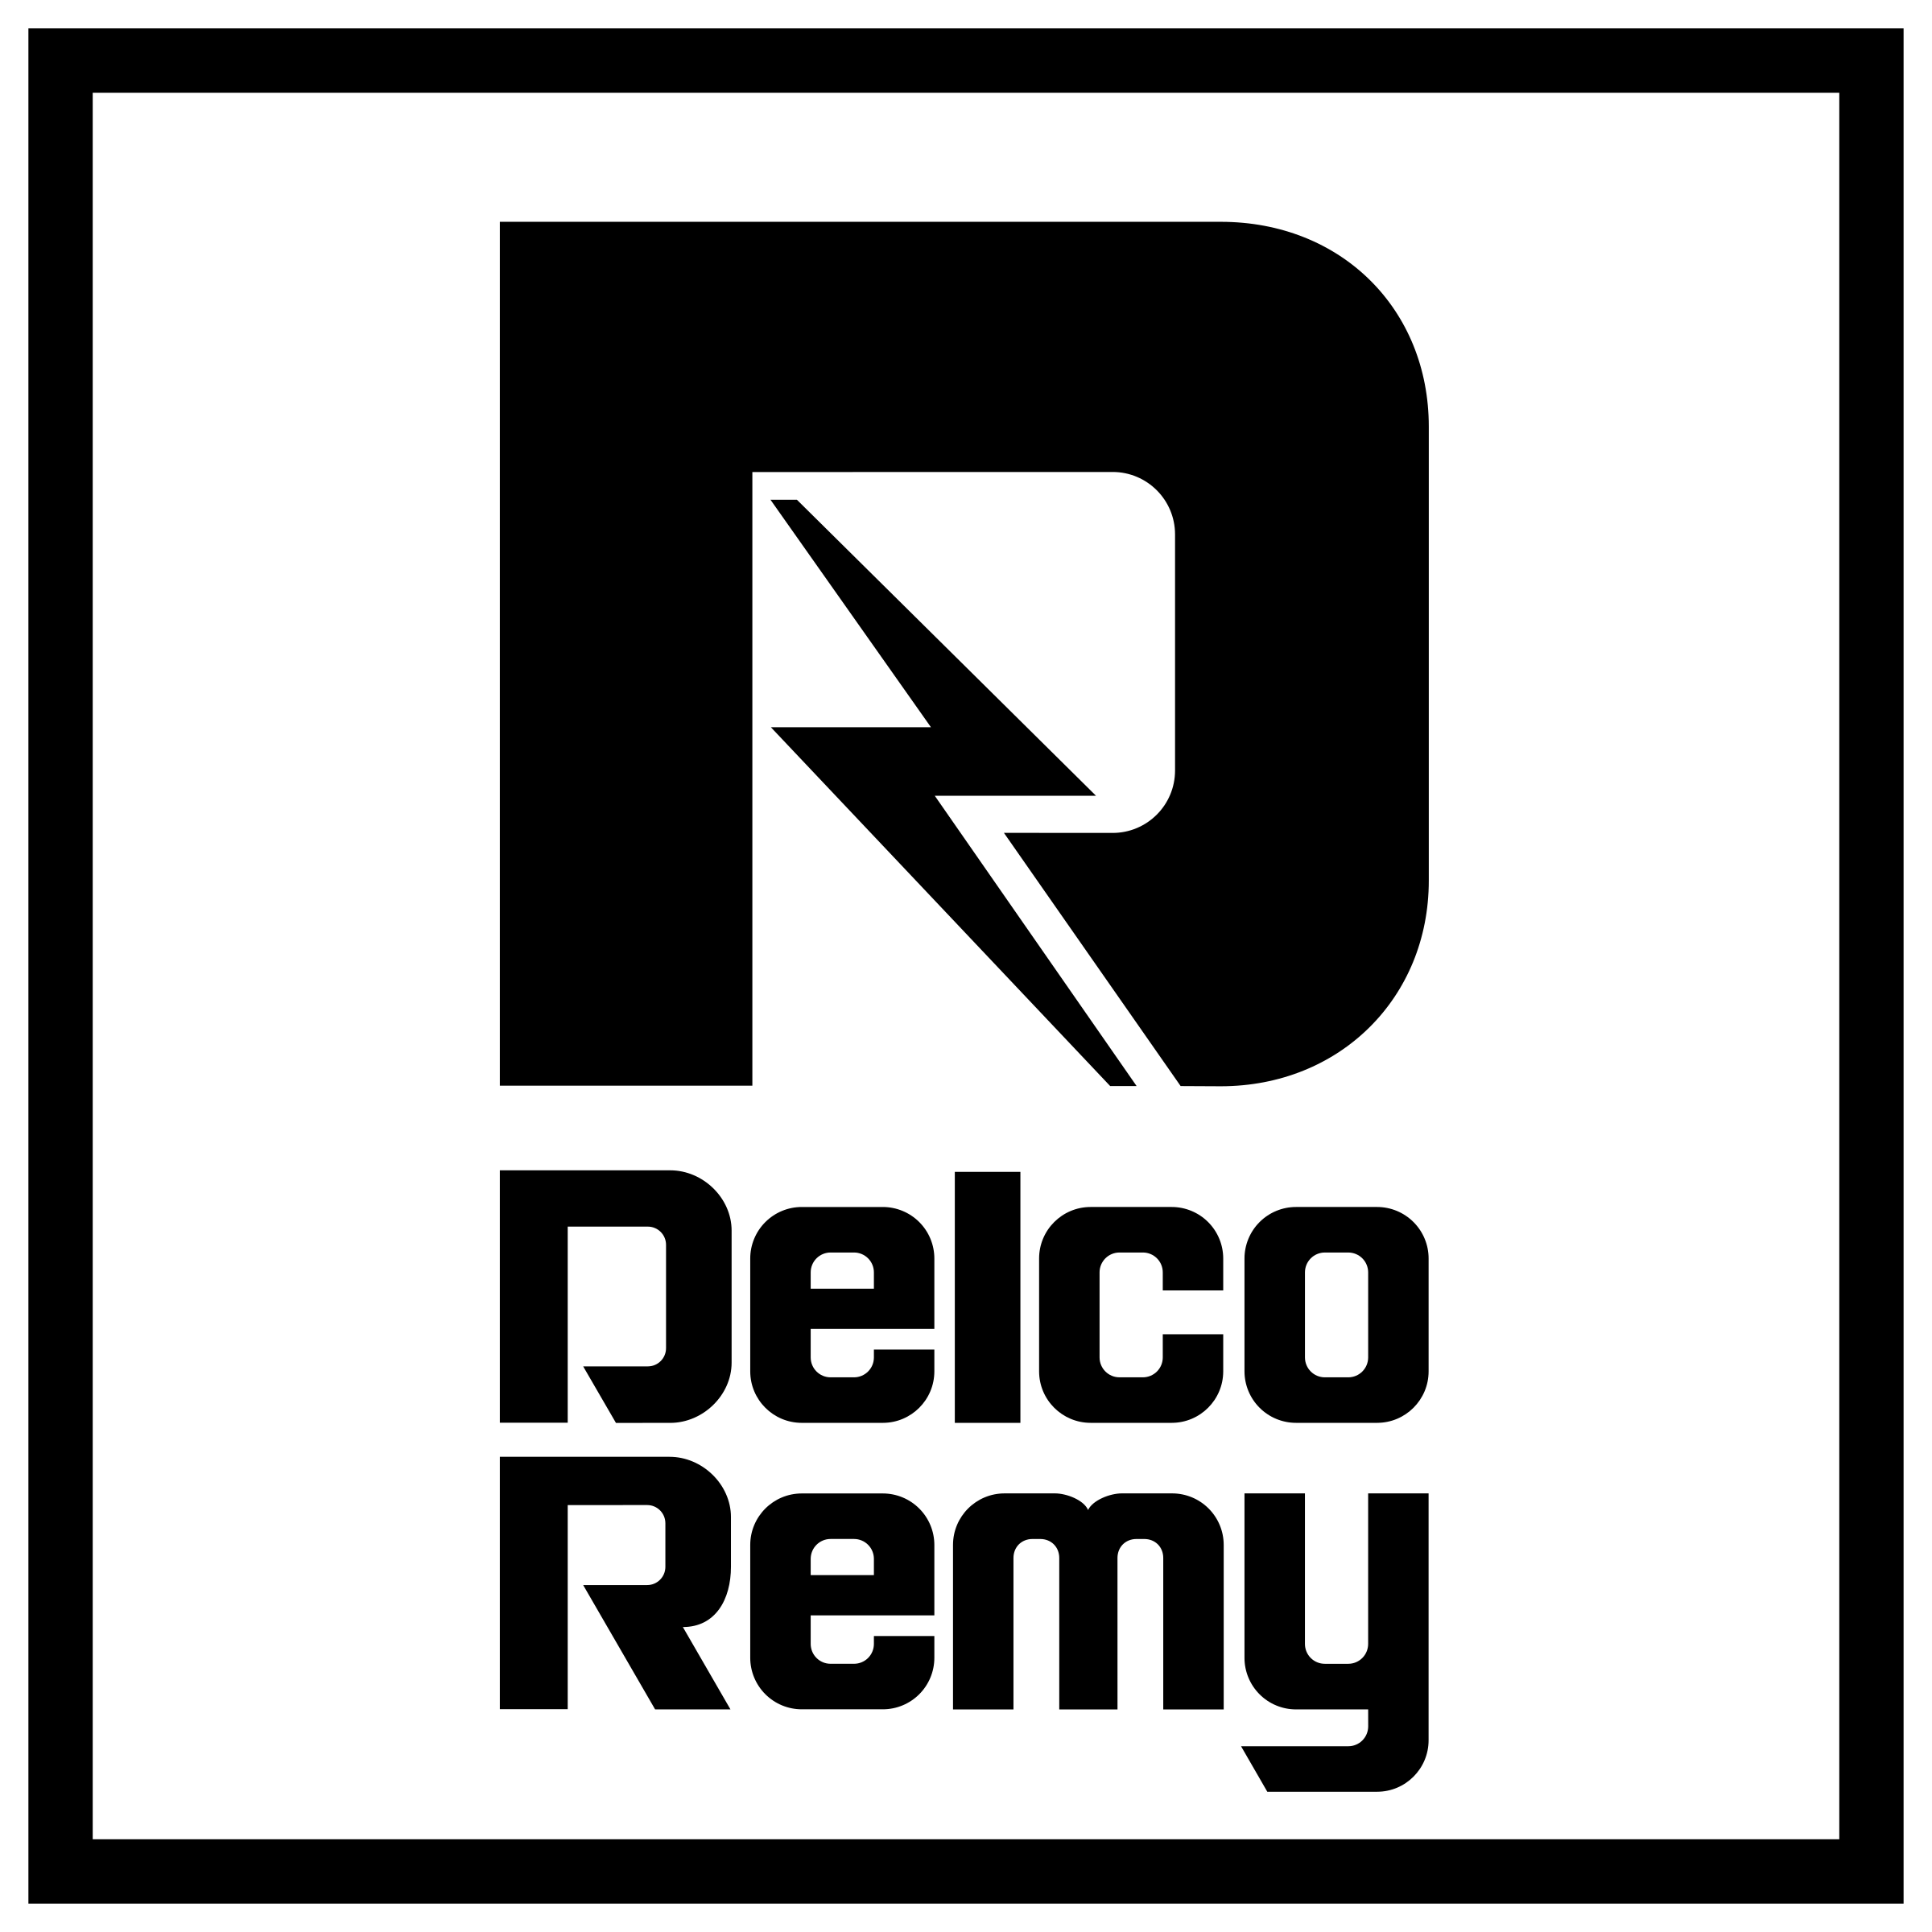 Delco Logo - Delco Remy Logo PNG Transparent & SVG Vector - Freebie Supply